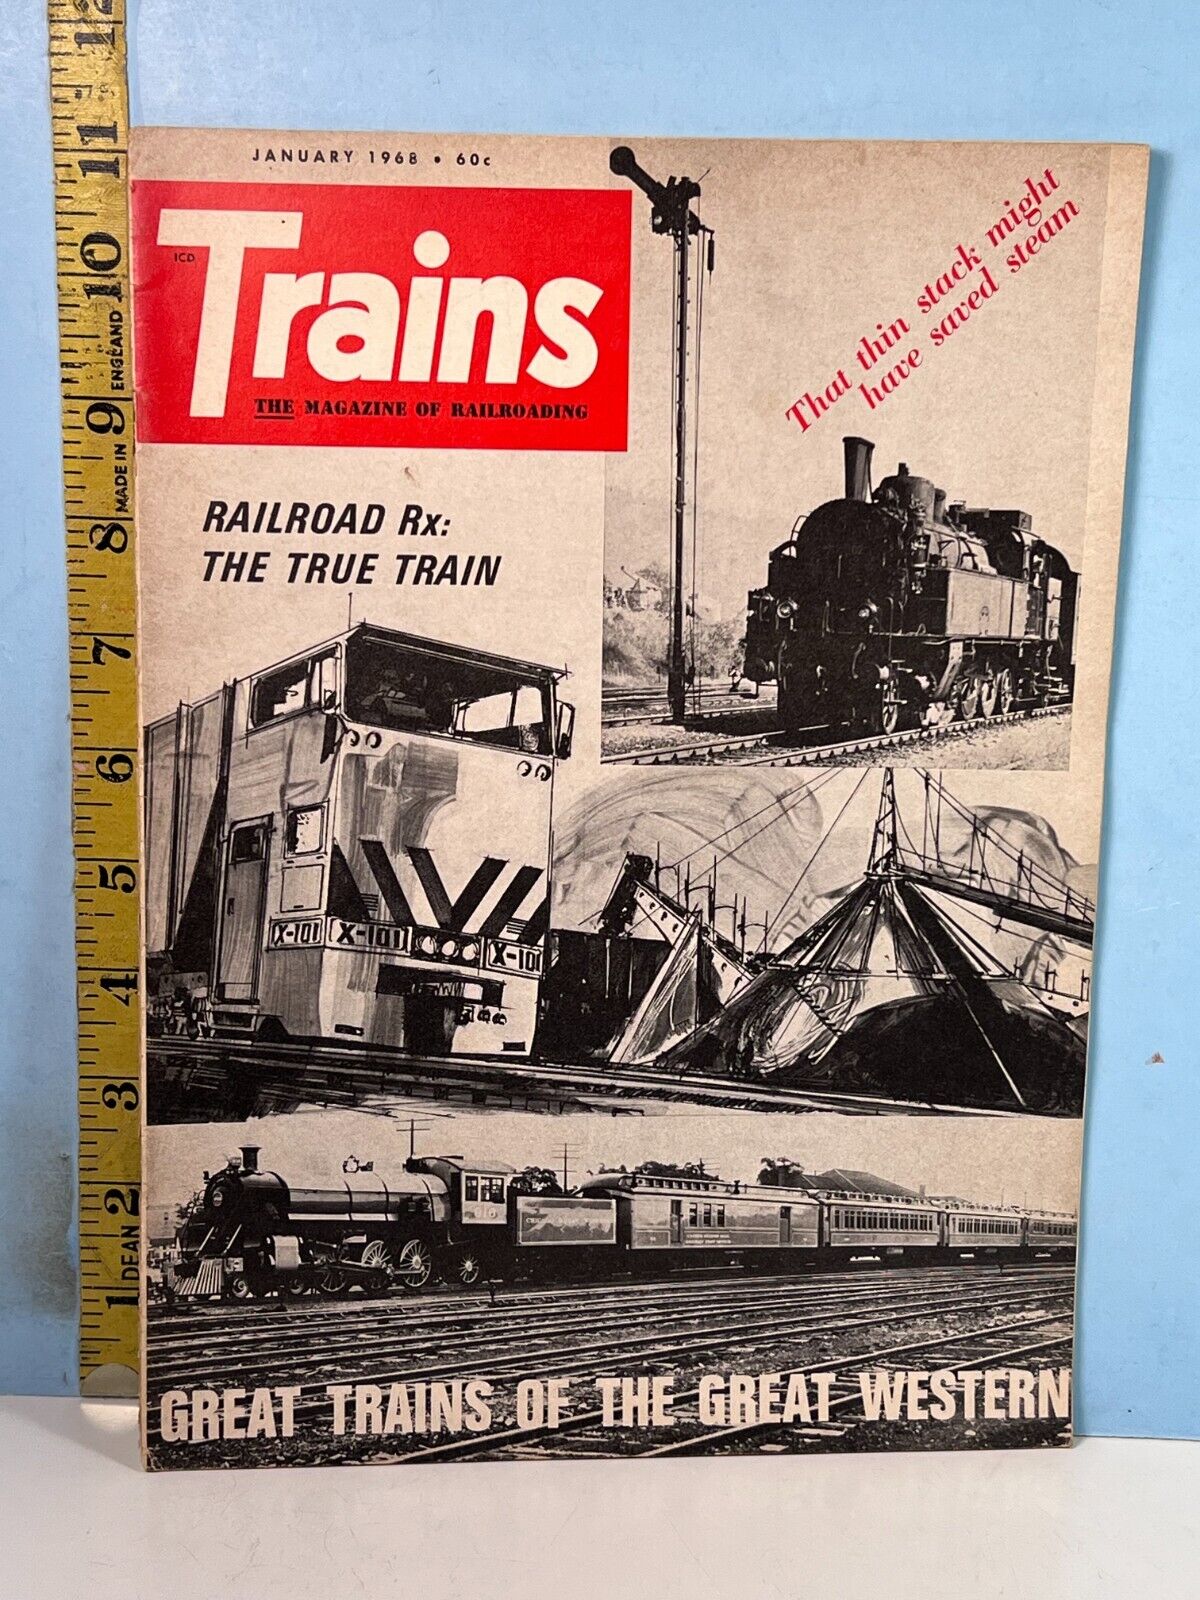 January 1968 TRAINS - The Magazine of Railroading Vol. 28, No. 3